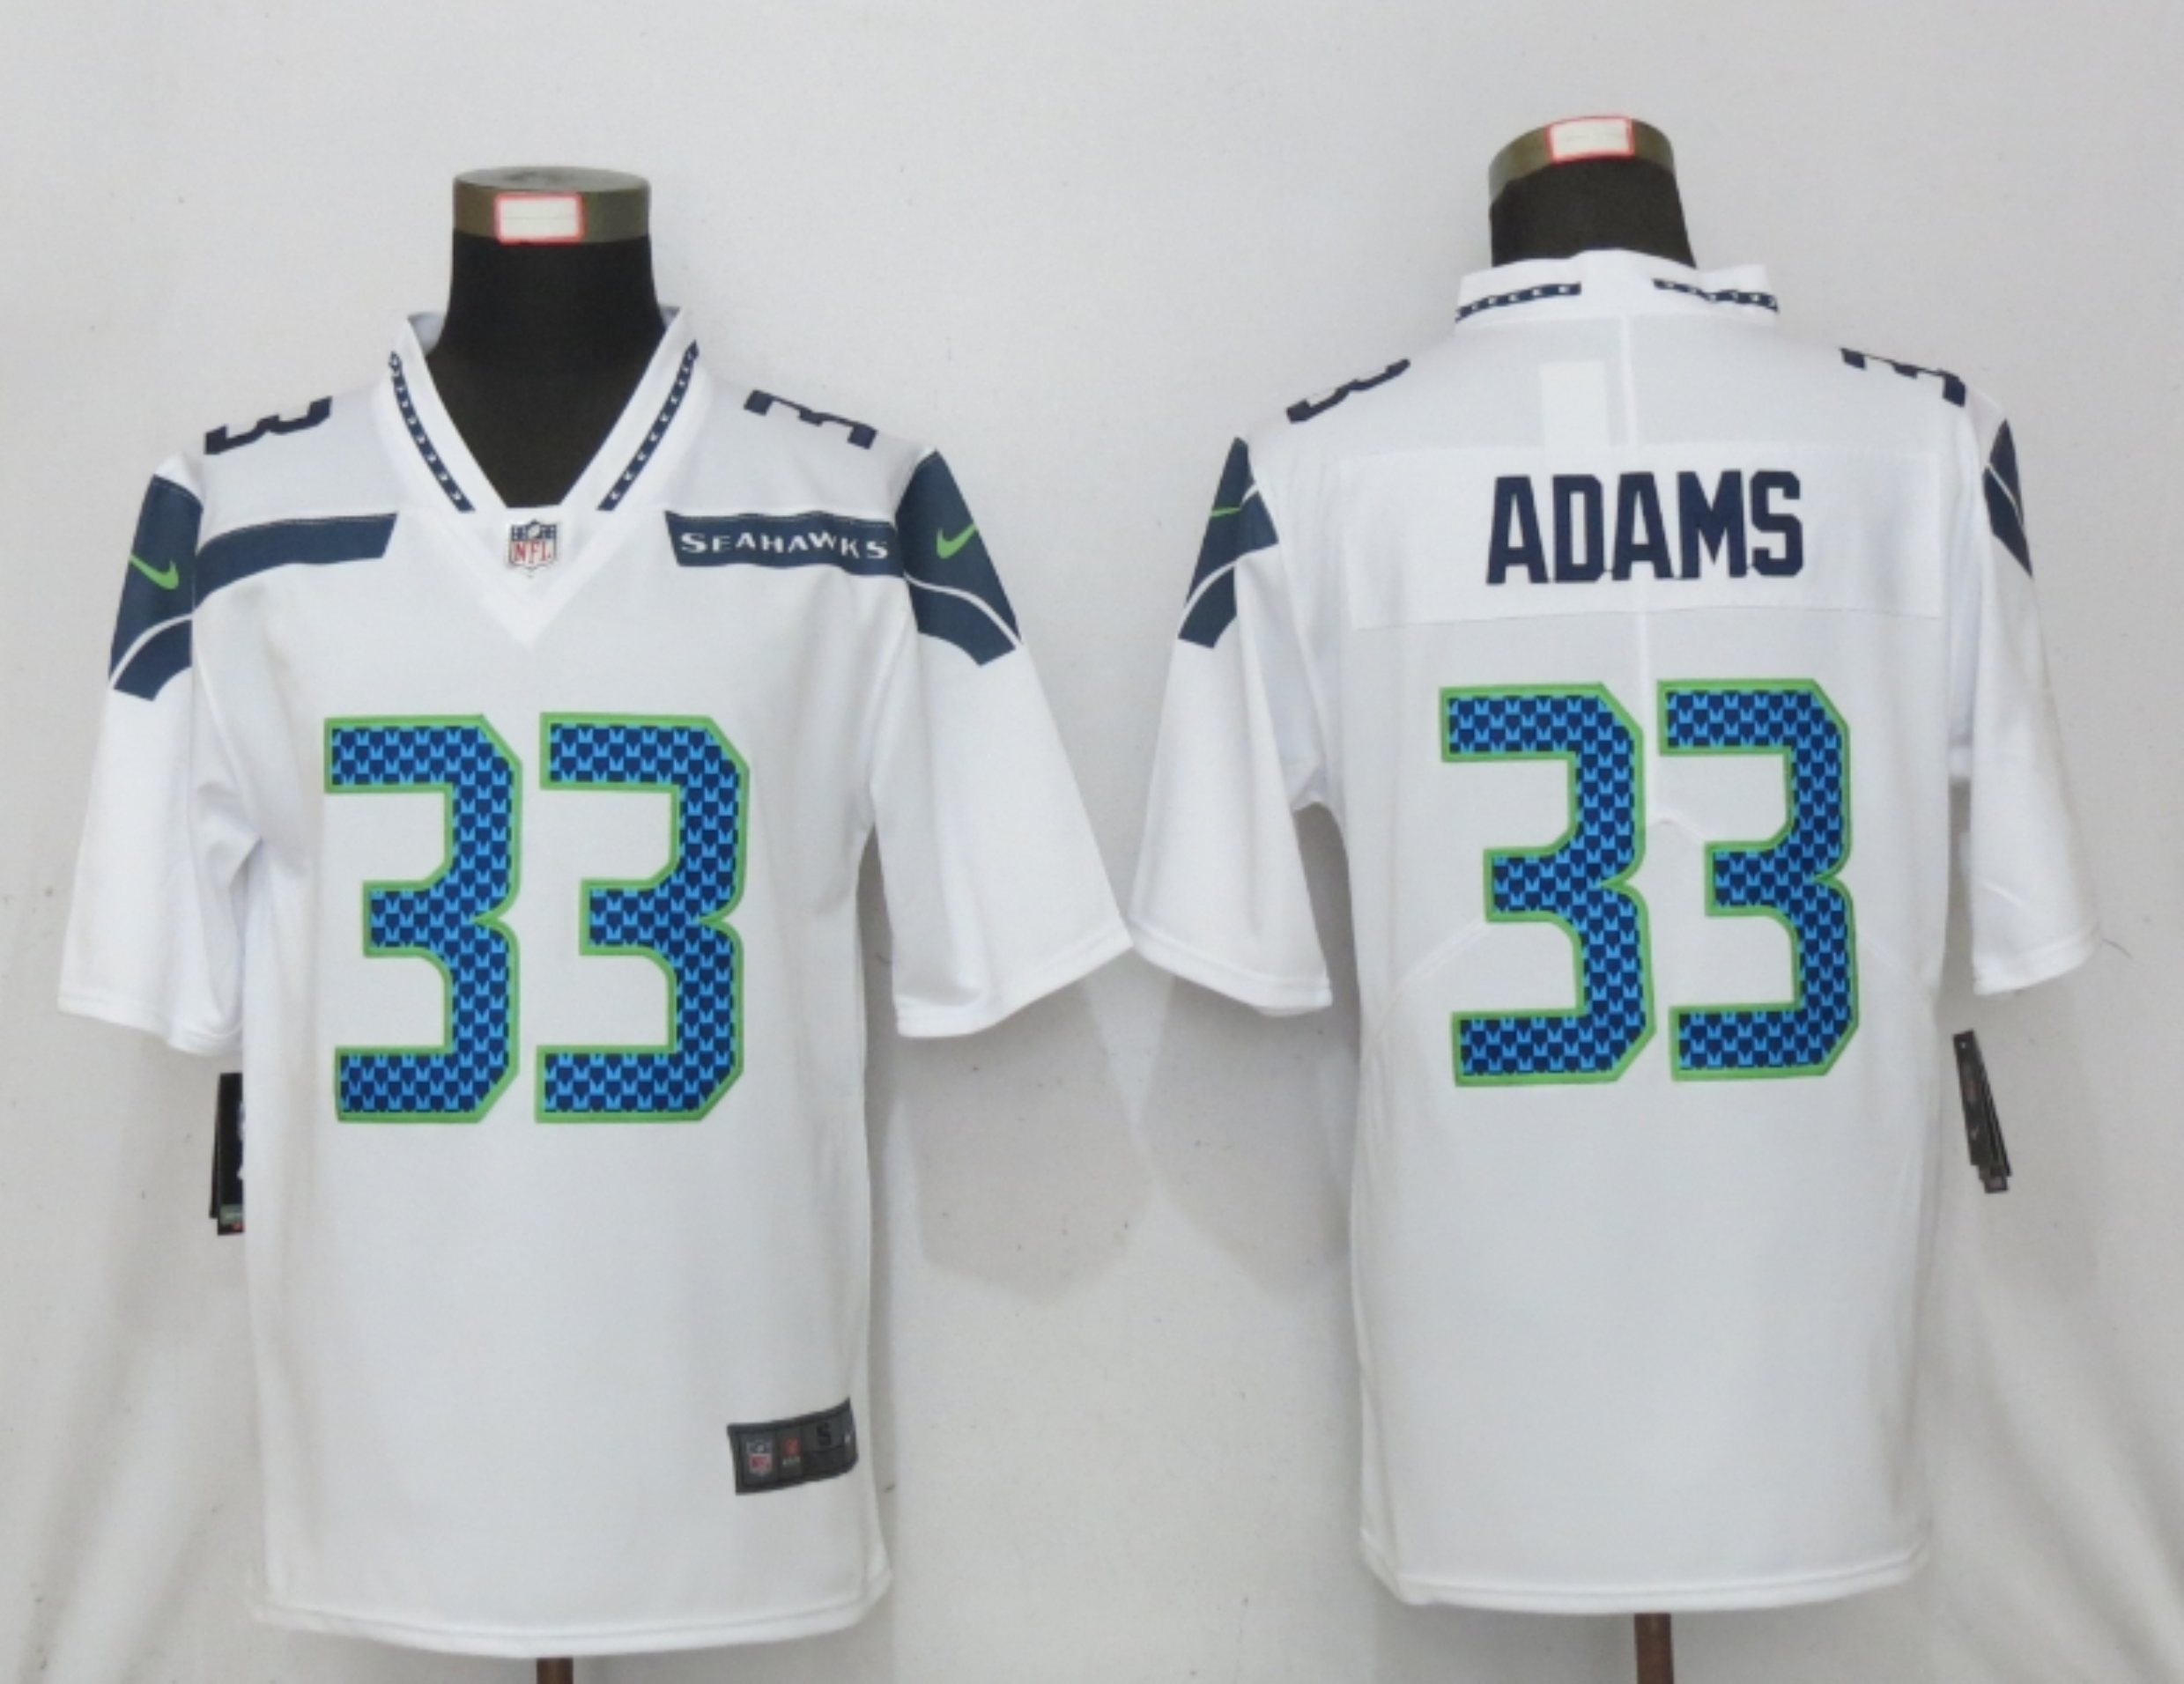 Men's Seattle Seahawks #33 Jamal Adams White 2020 Vapor Untouchable Stitched NFL Nike Limited Jersey